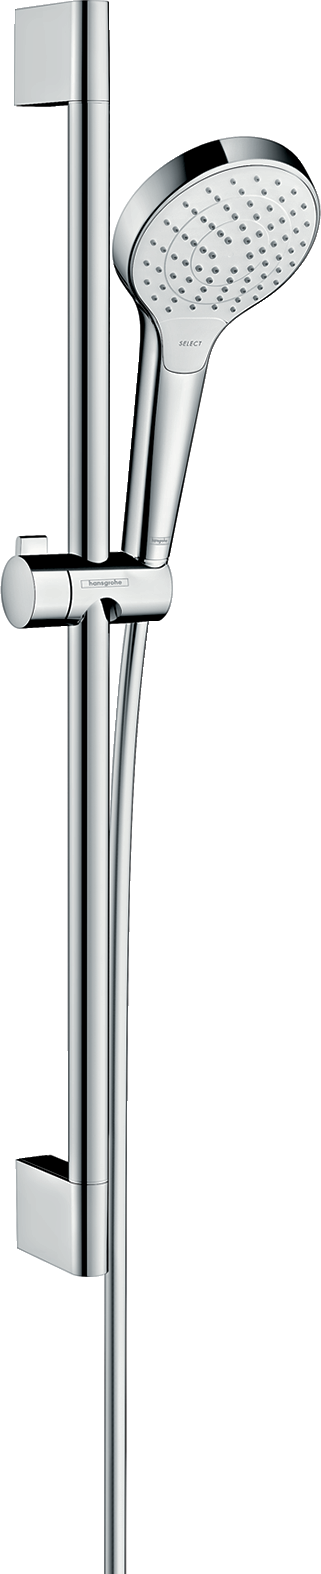 Croma Select S Shower set Vario EcoSmart 9 l/min with shower bar 65 cm